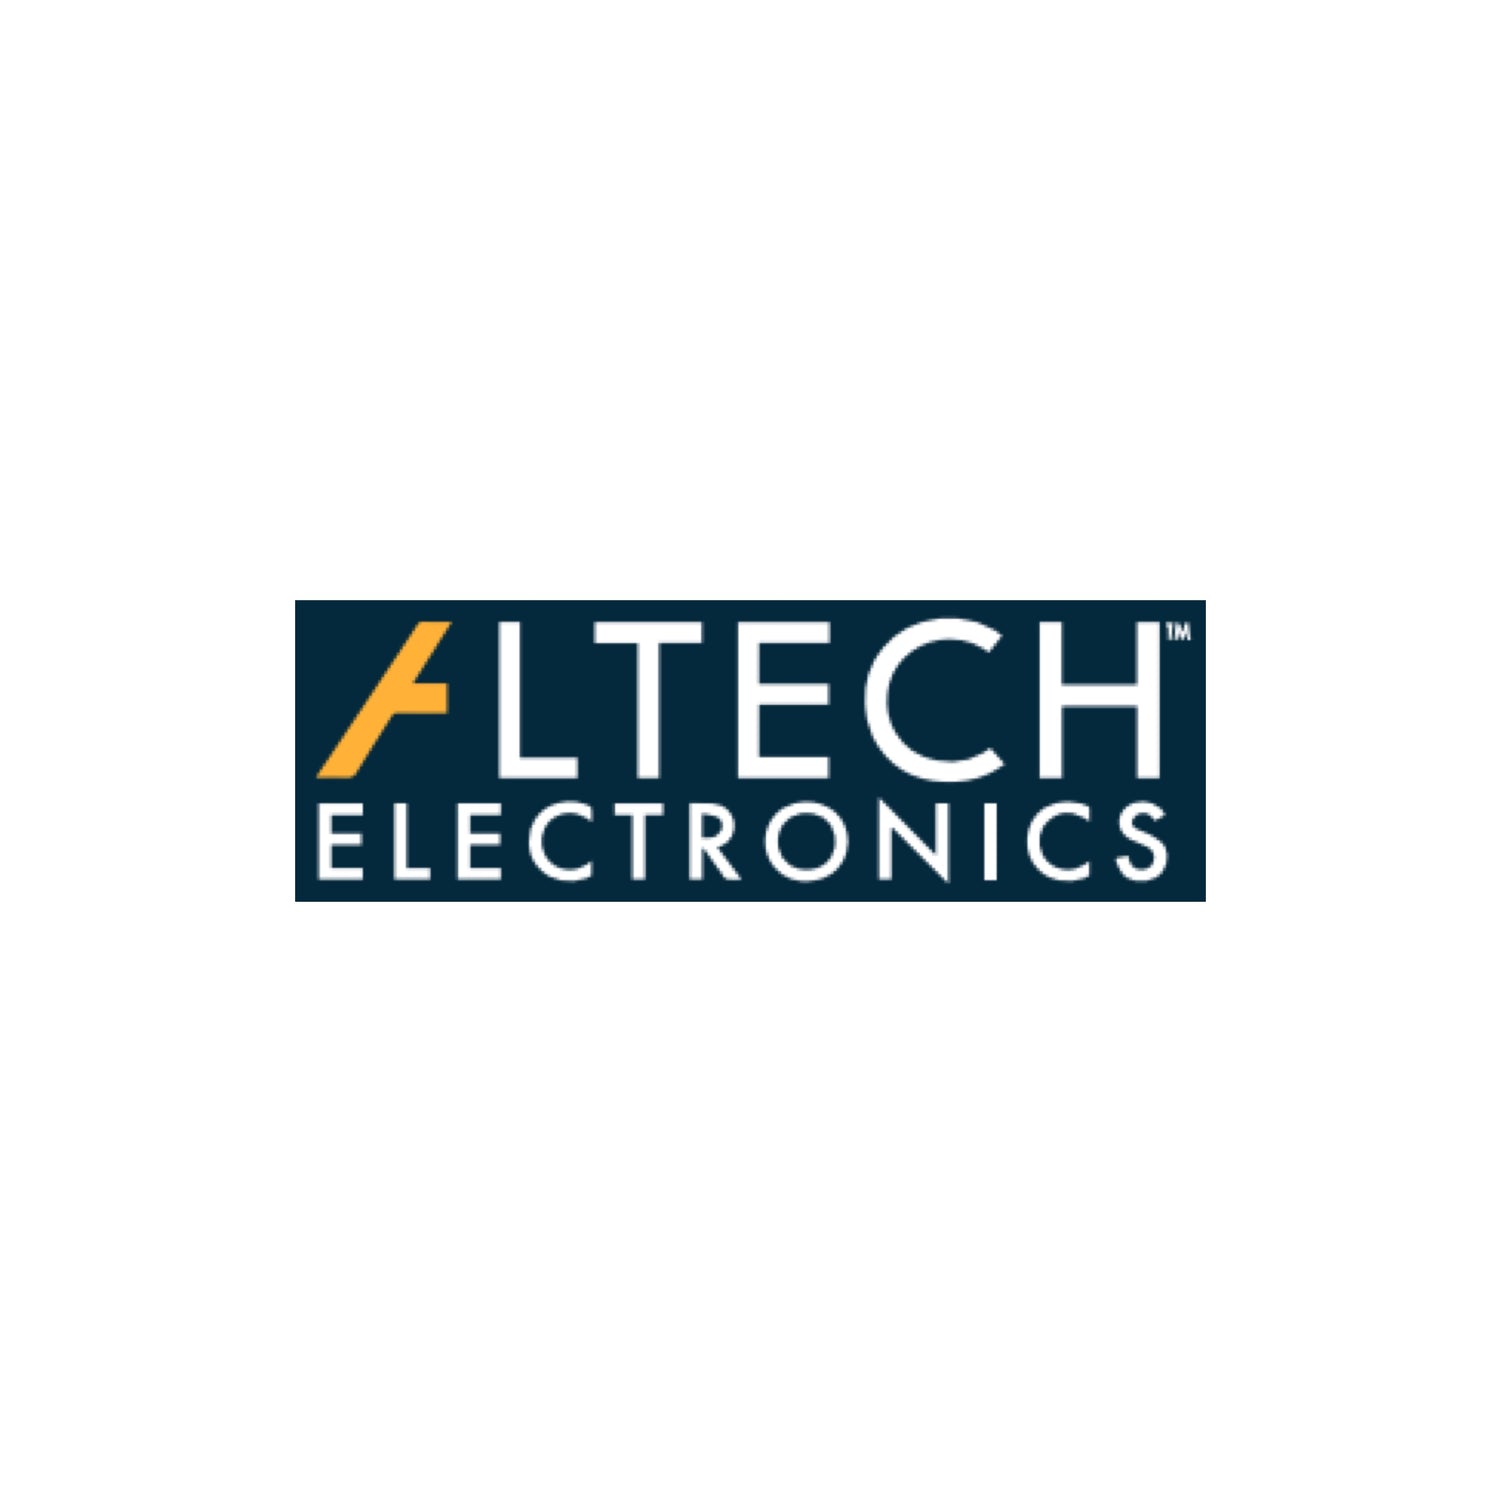 ALTECH ELECTRONICS